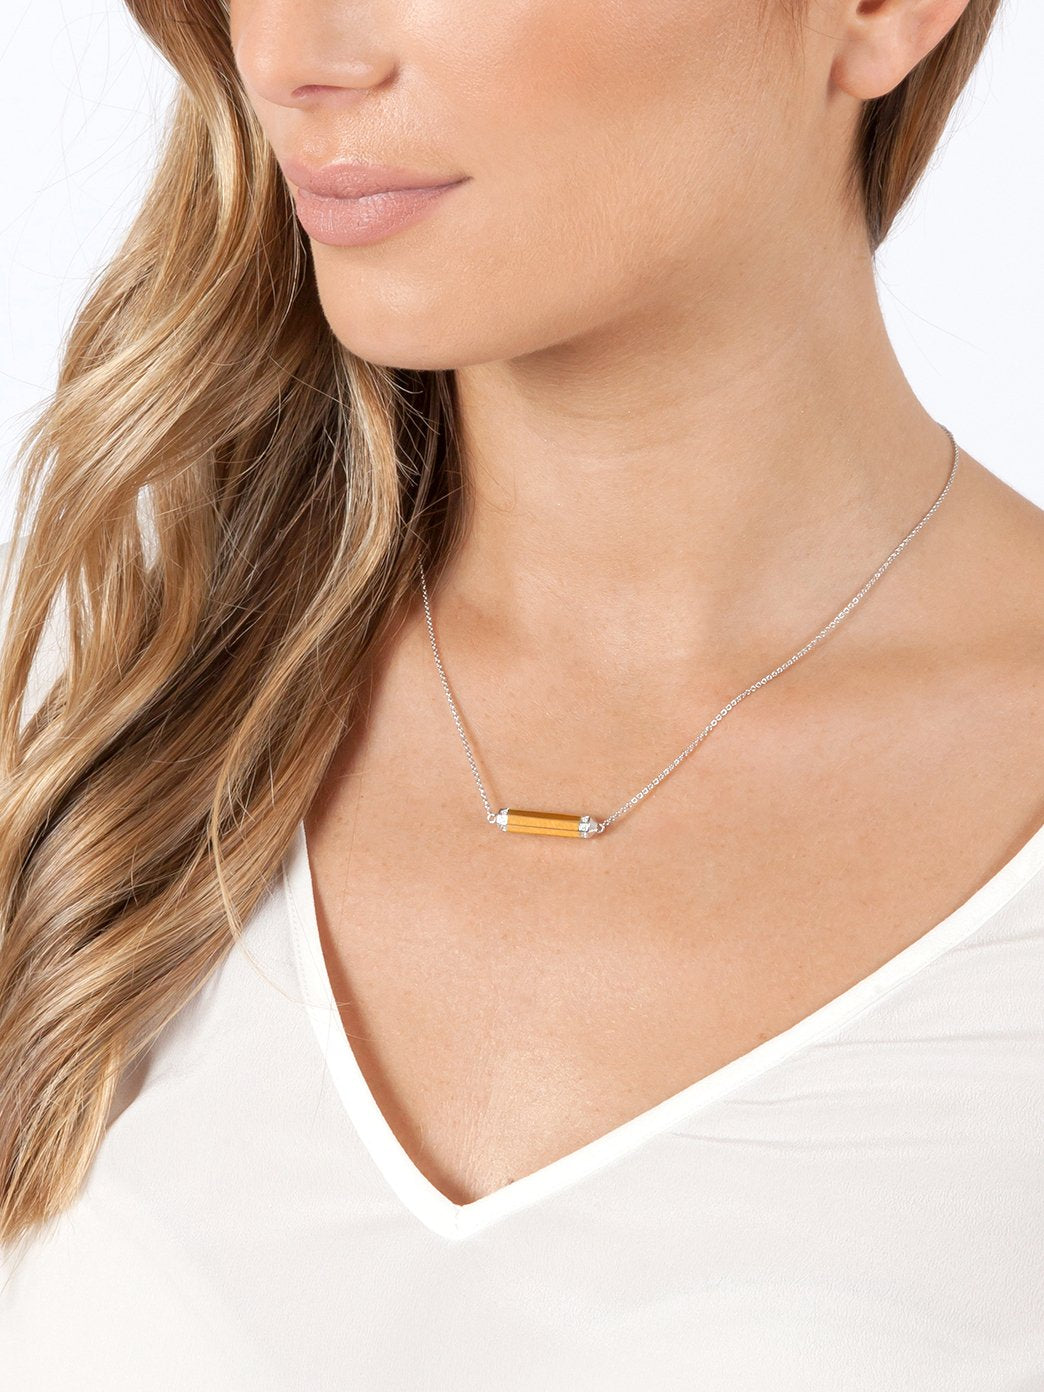 Fiorina Jewellery Manifest Yellow Gold Bar Necklace